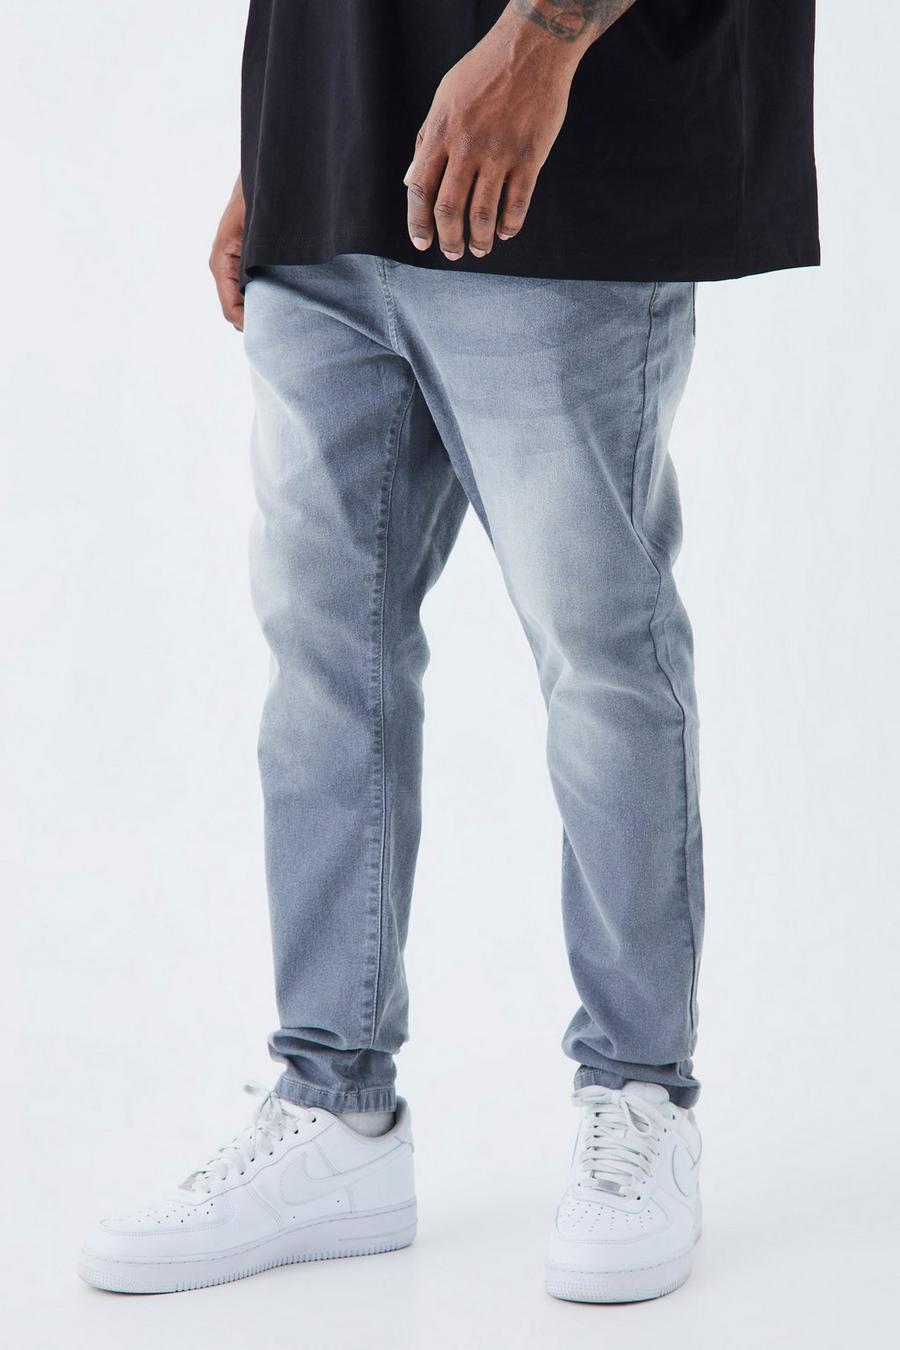 Grande taille - Jean stretch super skinny, Mid grey image number 1